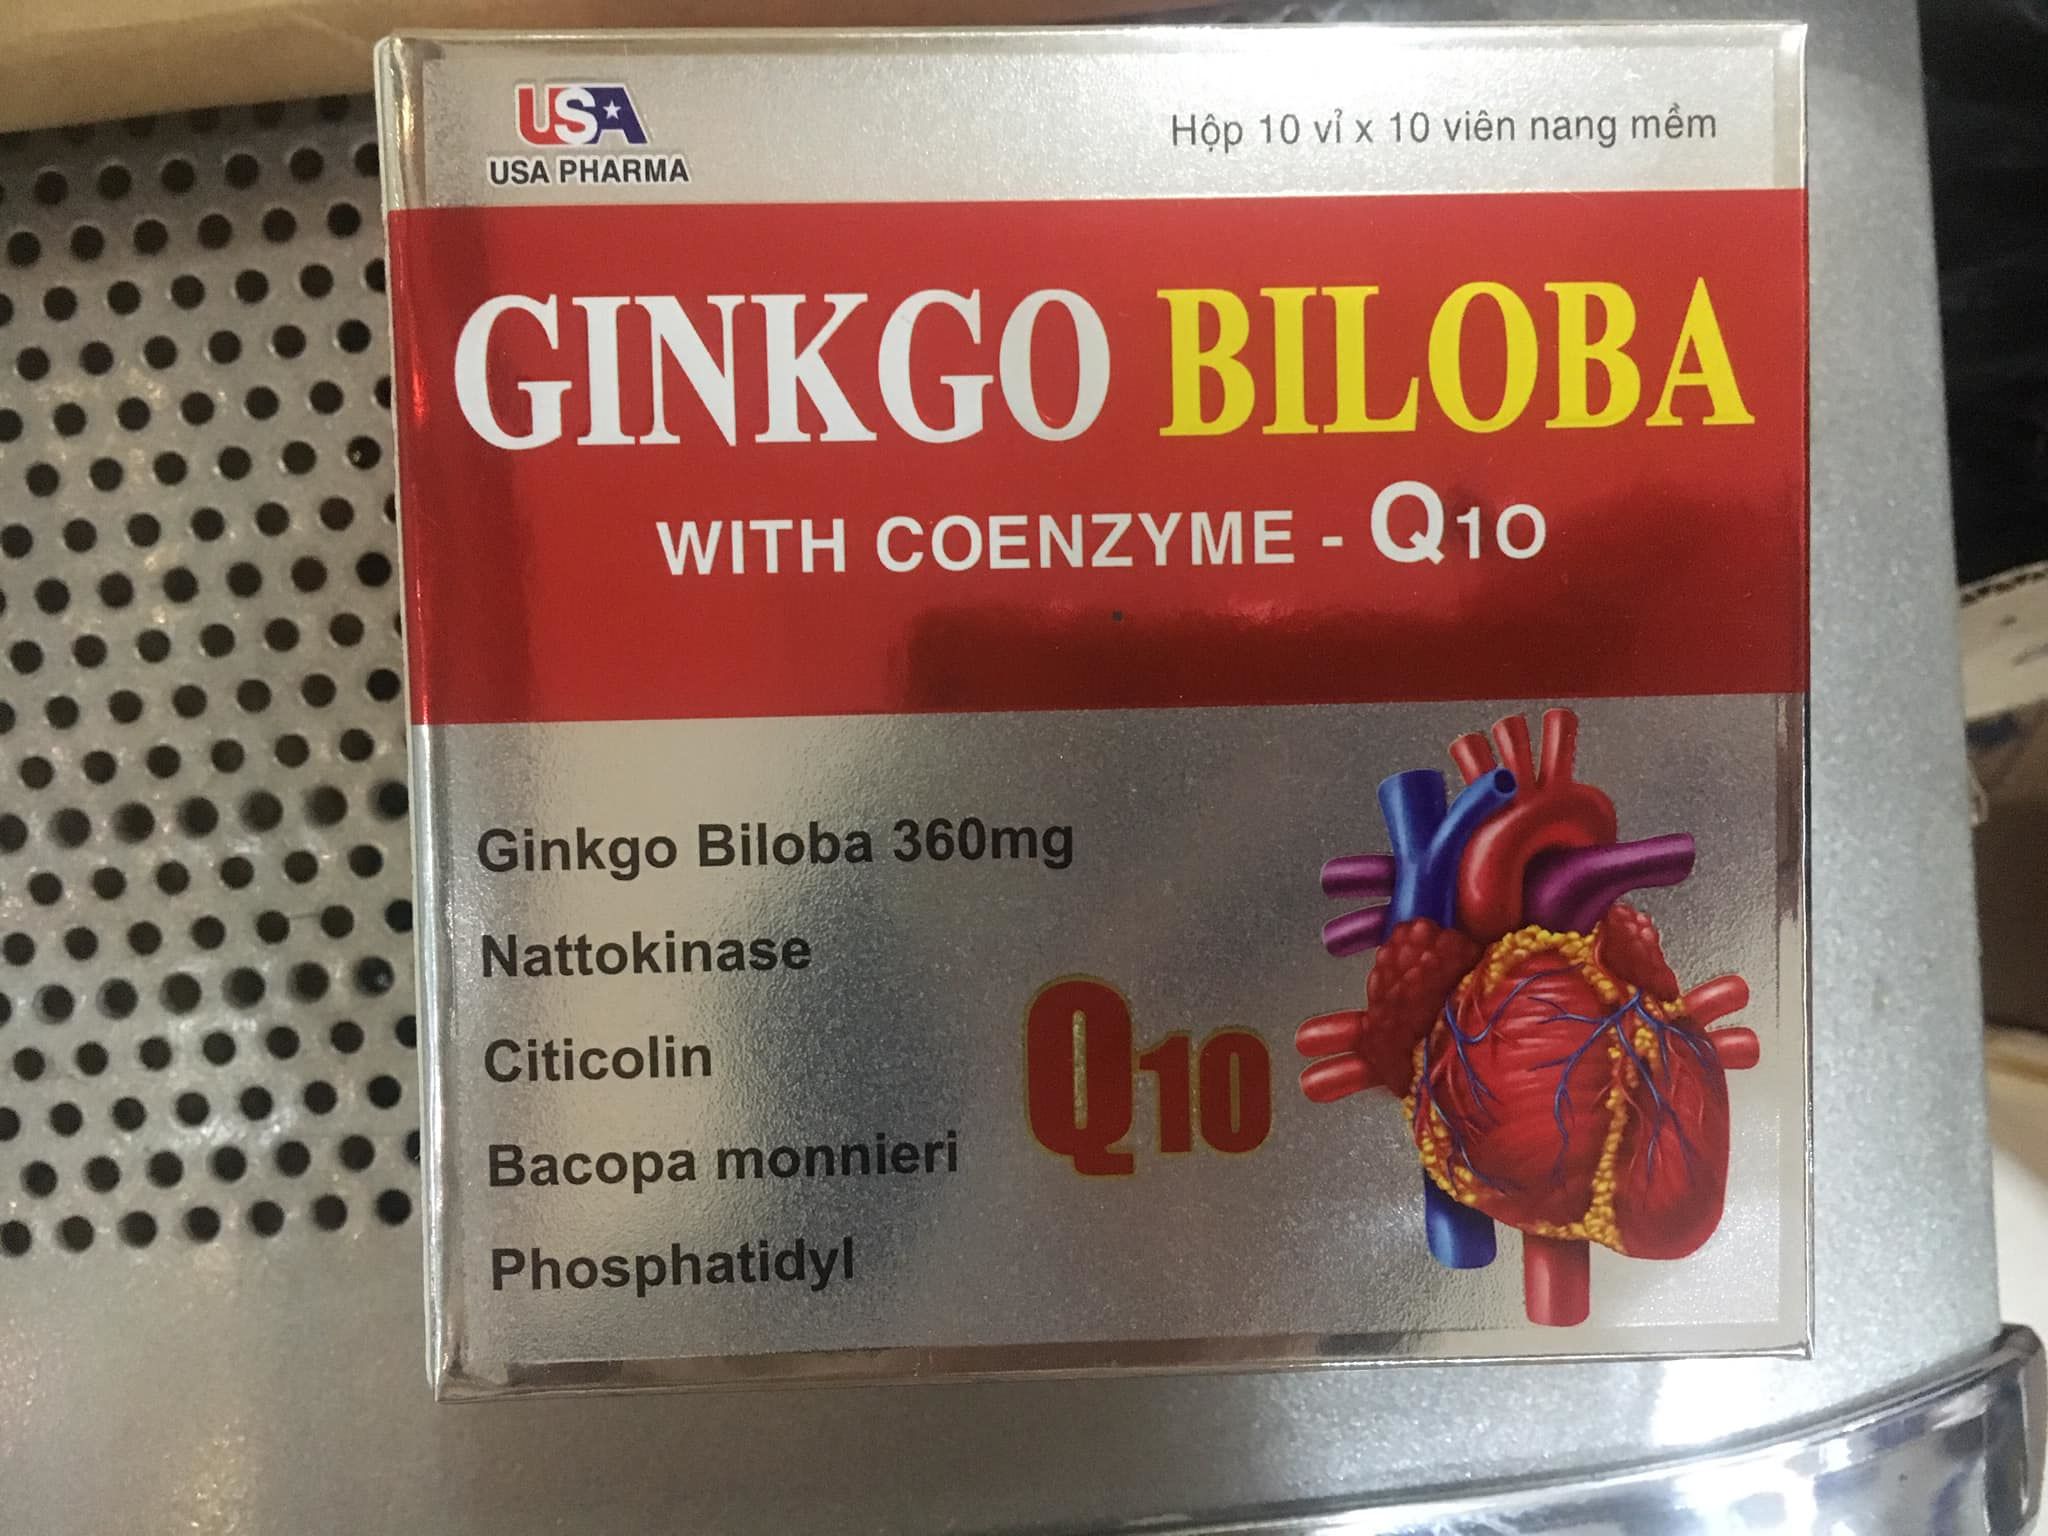 Ginkgo Biloba 360mg with coenzyme Q10